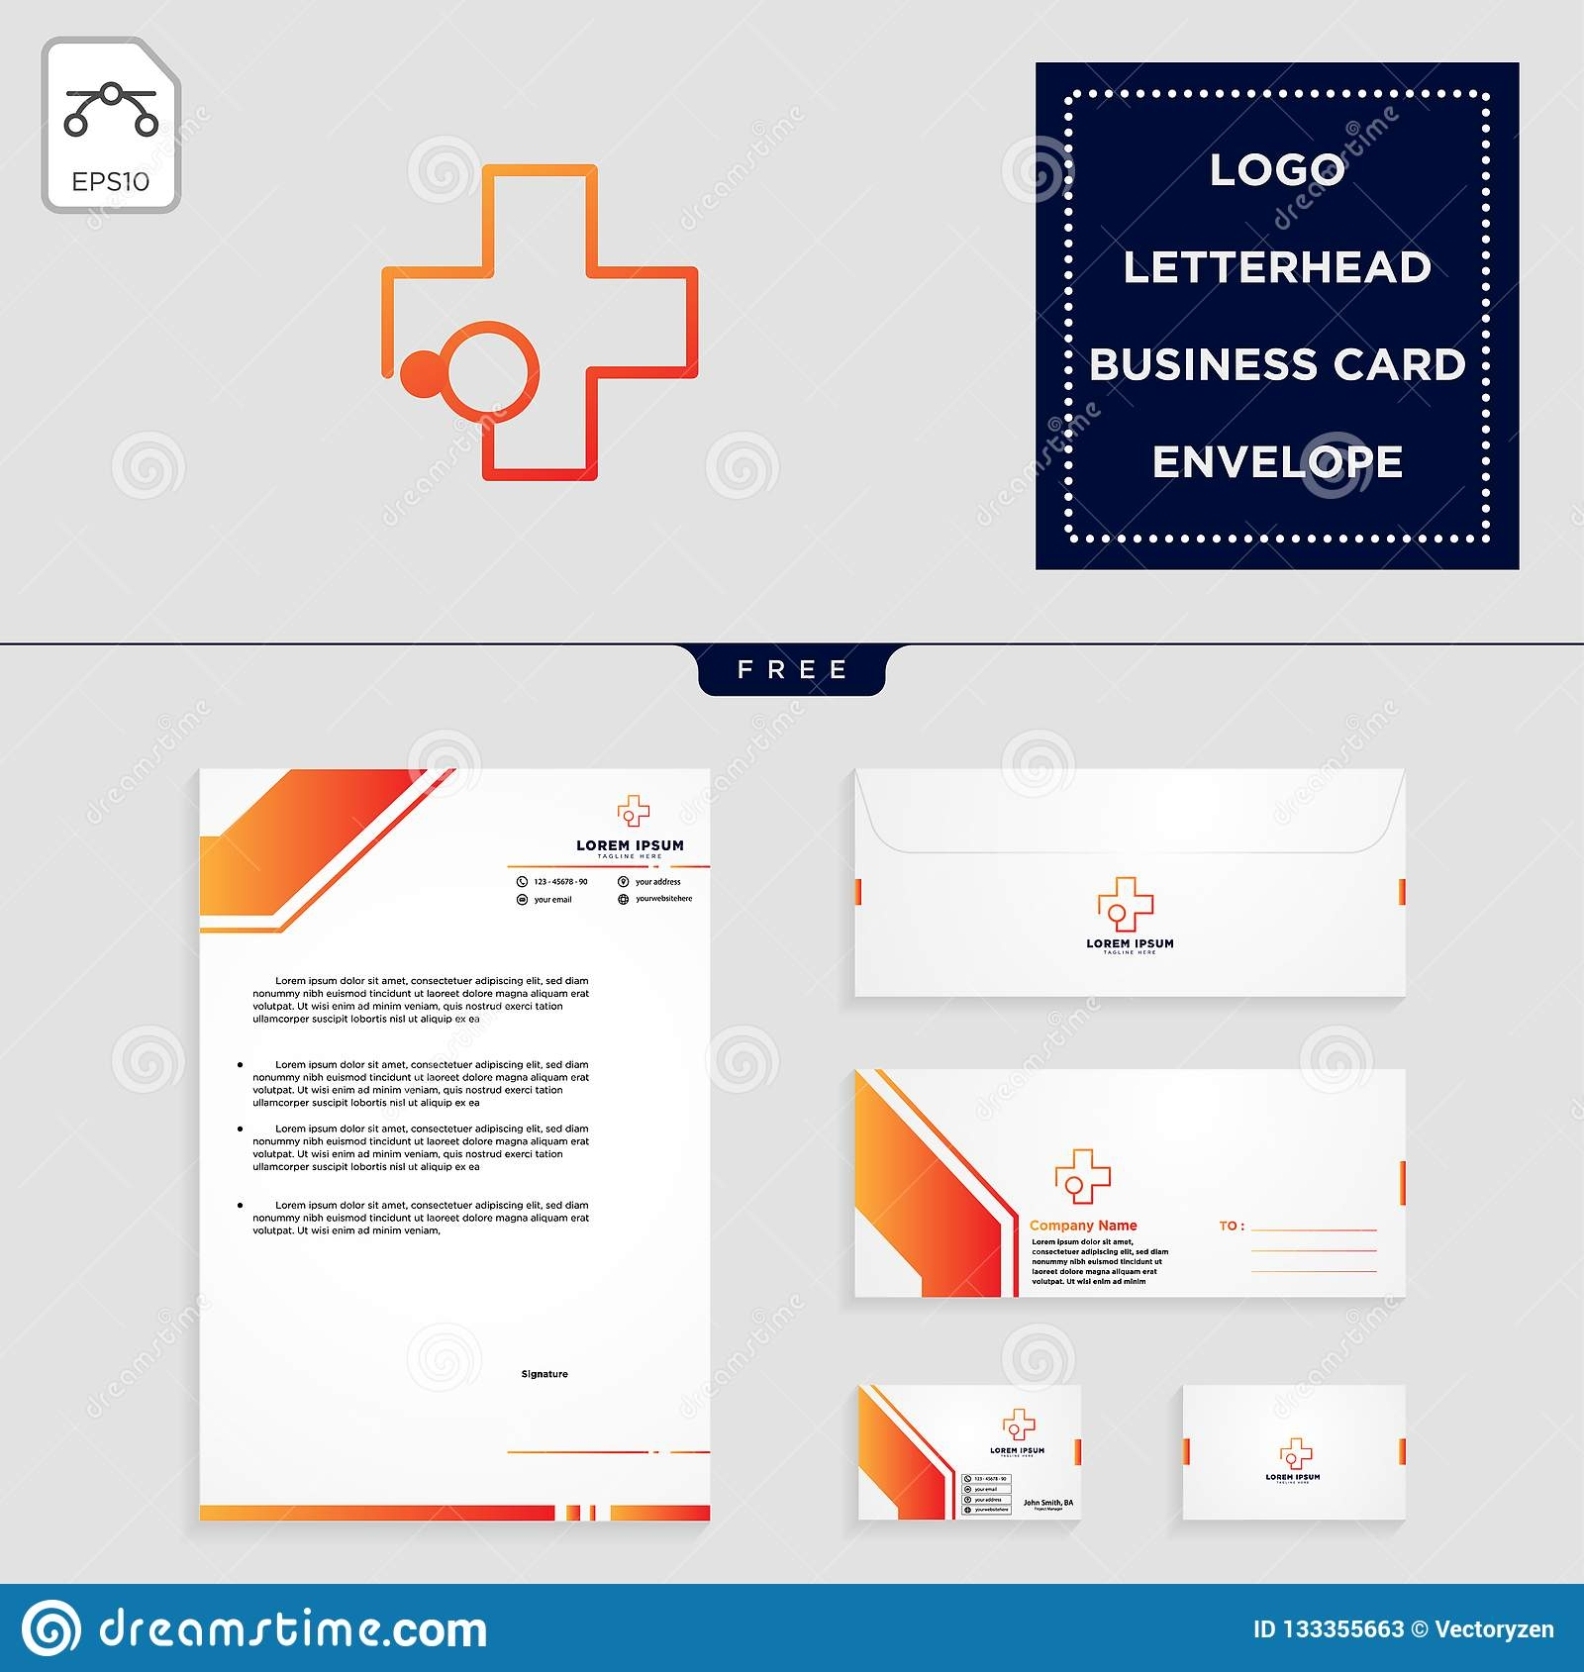 Medical Cross Logo Template And Free Letterhead, Envelope, Business In Business Card Letterhead Envelope Template